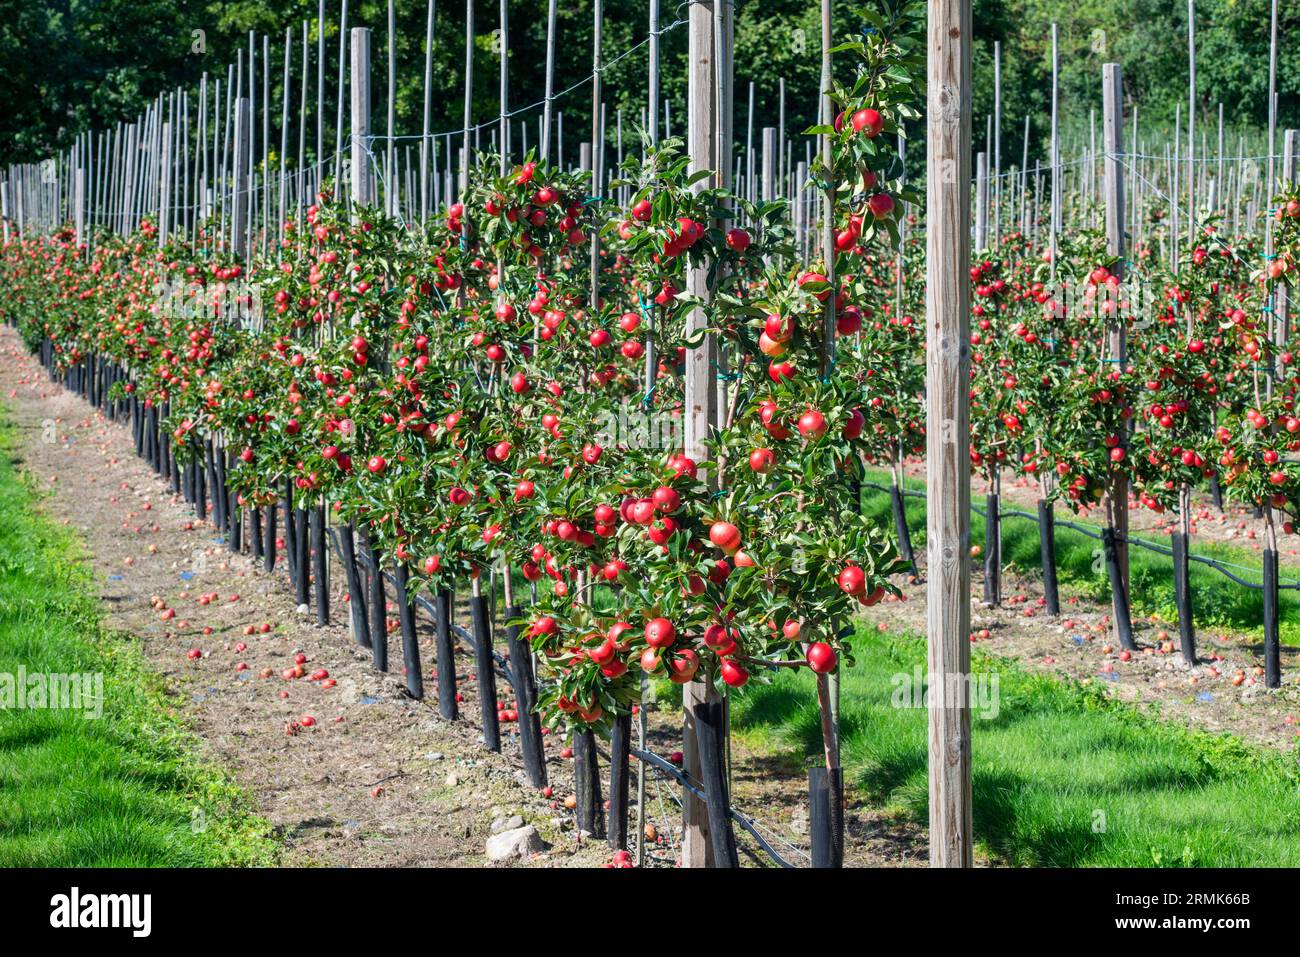 Apple plantation of Discovery apples in Oesterlen fruit district, Kivik, Scania, Sweden, Scandinavia Stock Photo